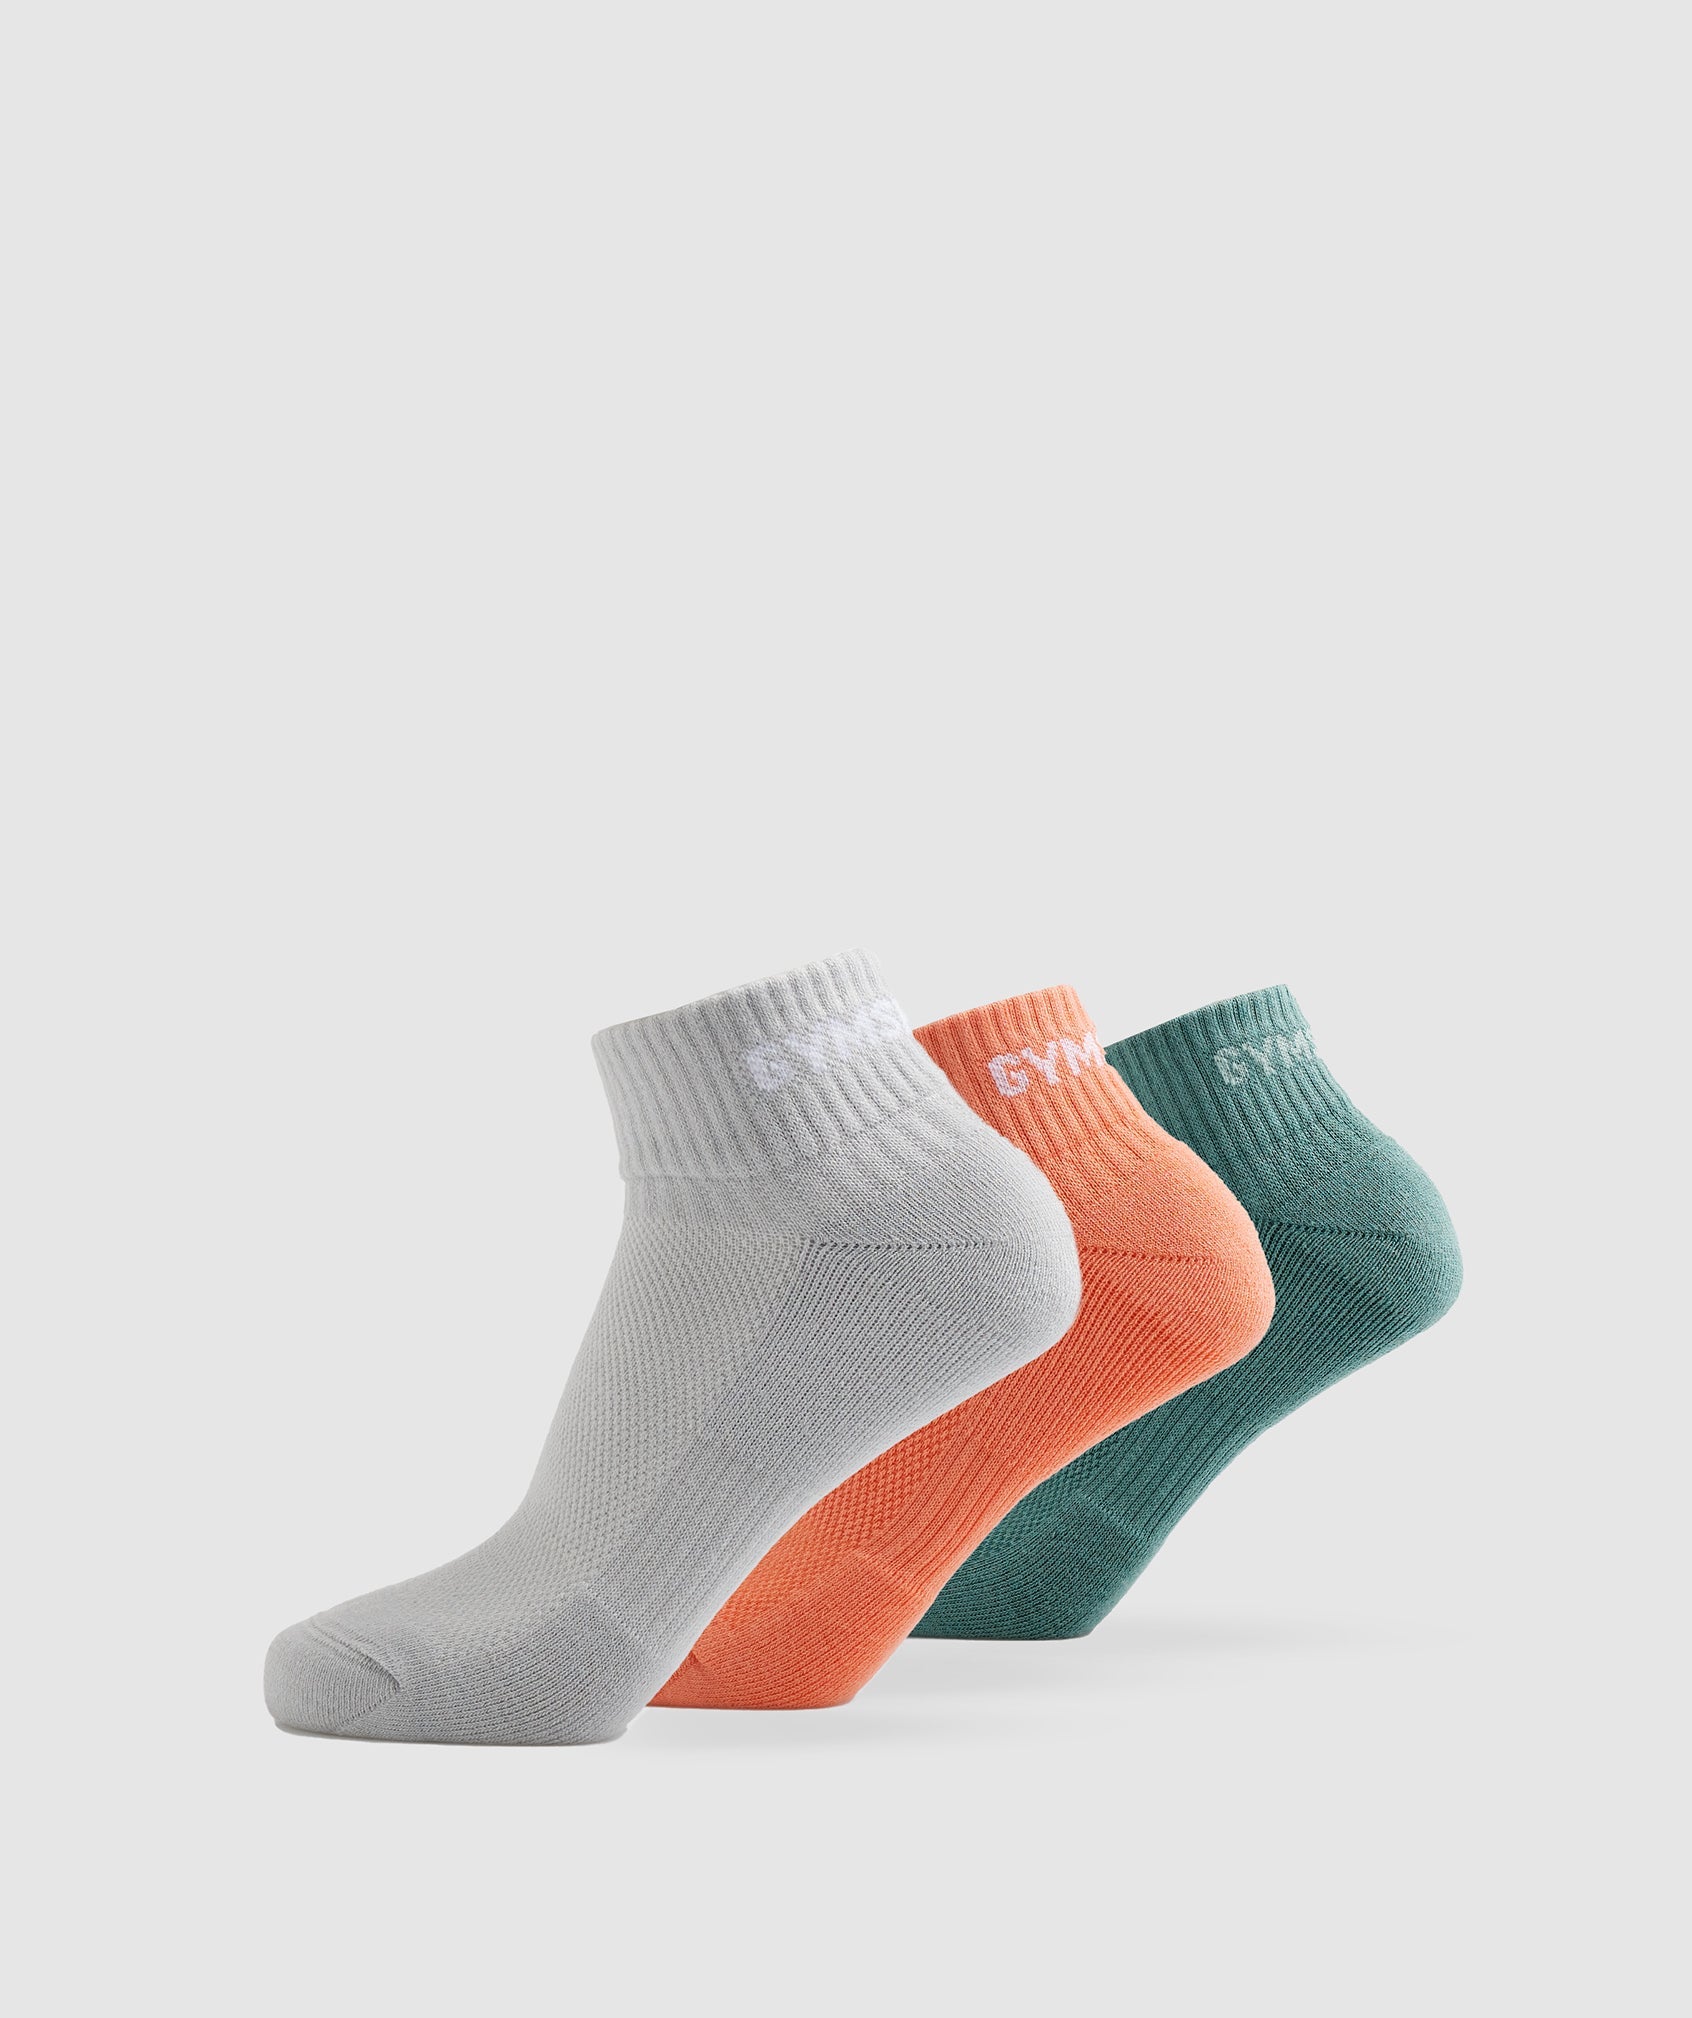 Jacquared Quarter Socks 3pk in Light Grey/Orange/Ink Teal - view 1